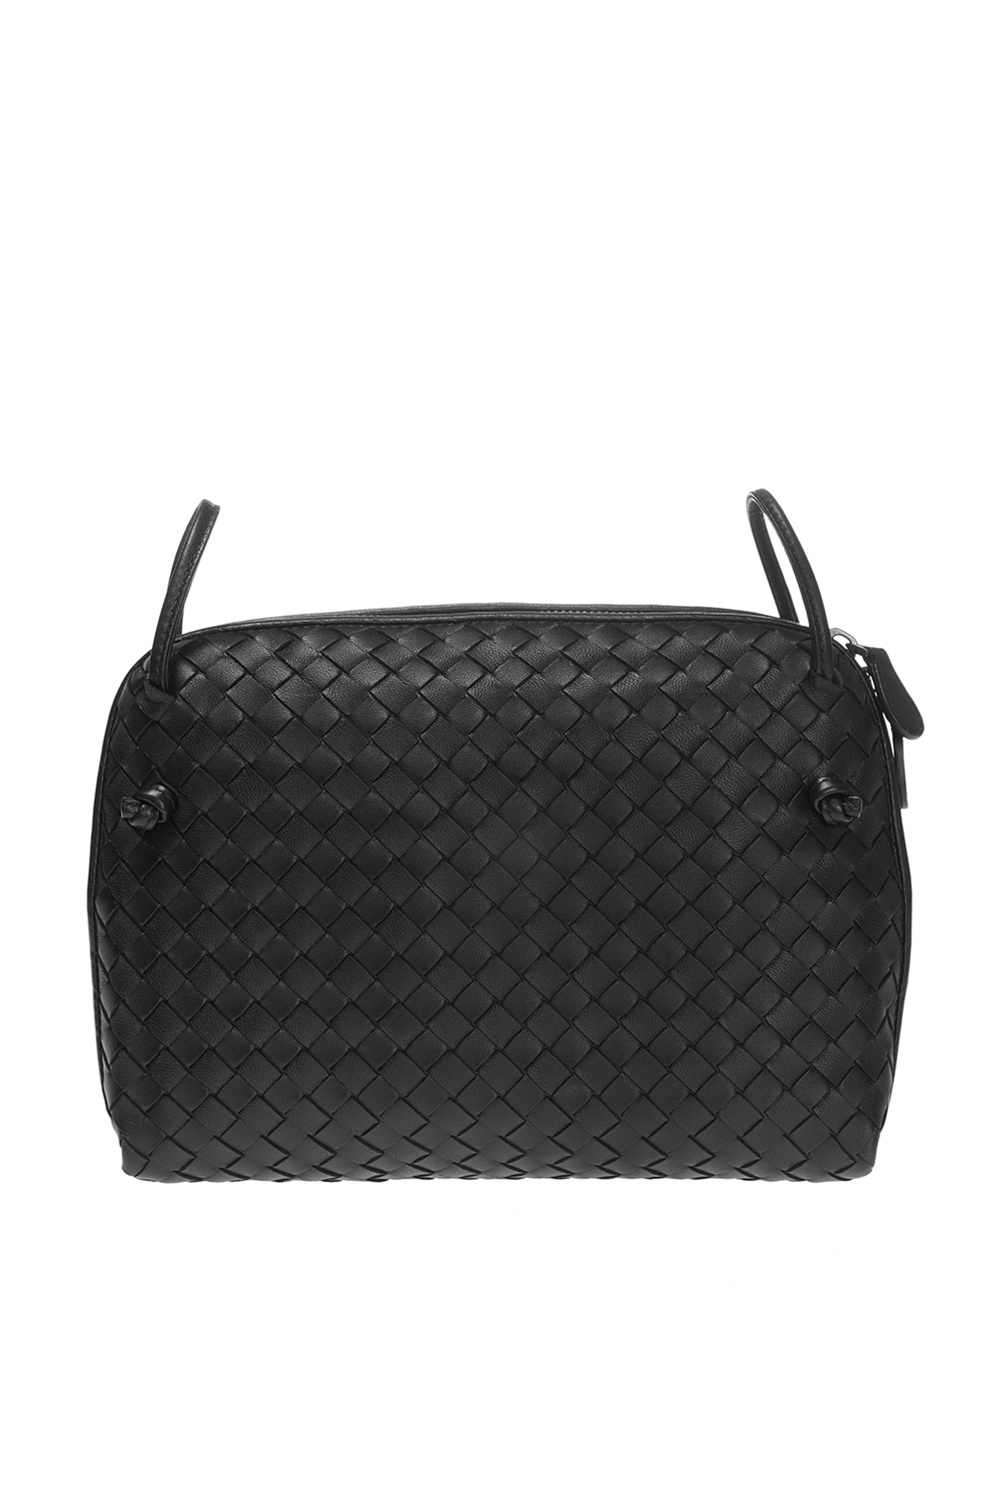 Brand New Bottega Veneta Nodini Shoulder/Crossbody Bag